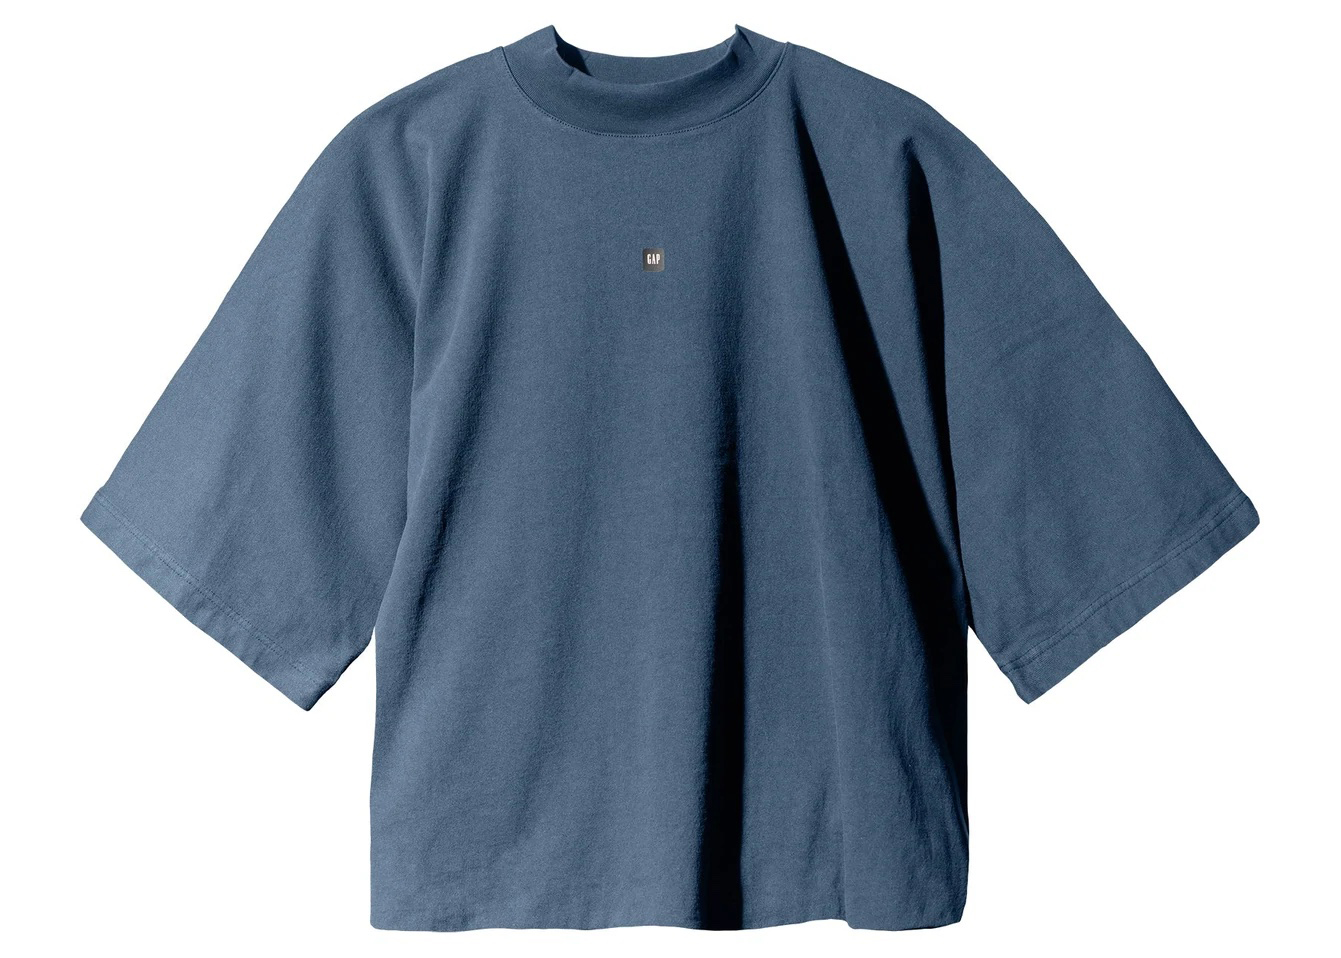 Yeezy Gap Tシャツの通販・購入 - StockX